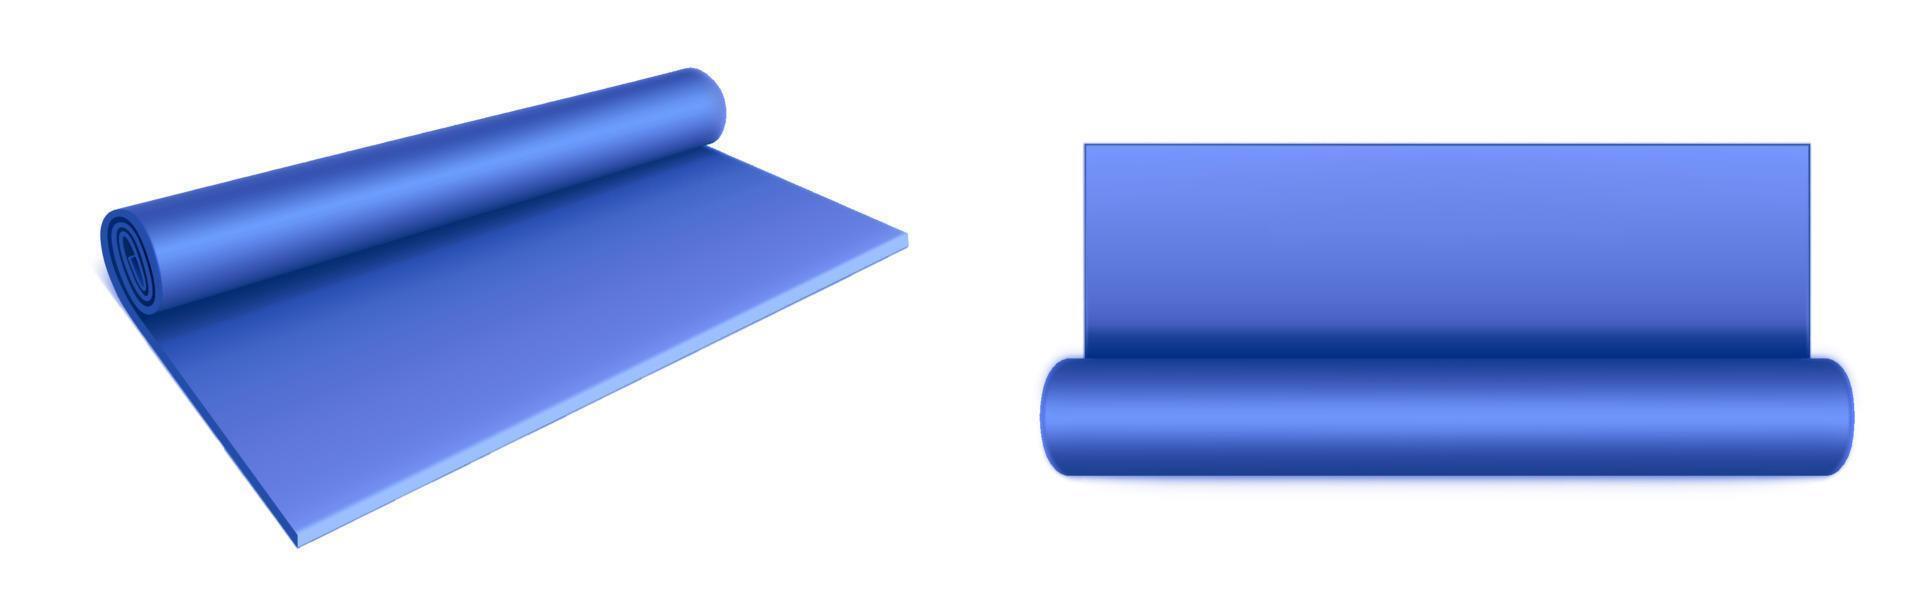 yoga mat top en kant visie, blauw gerold matras vector